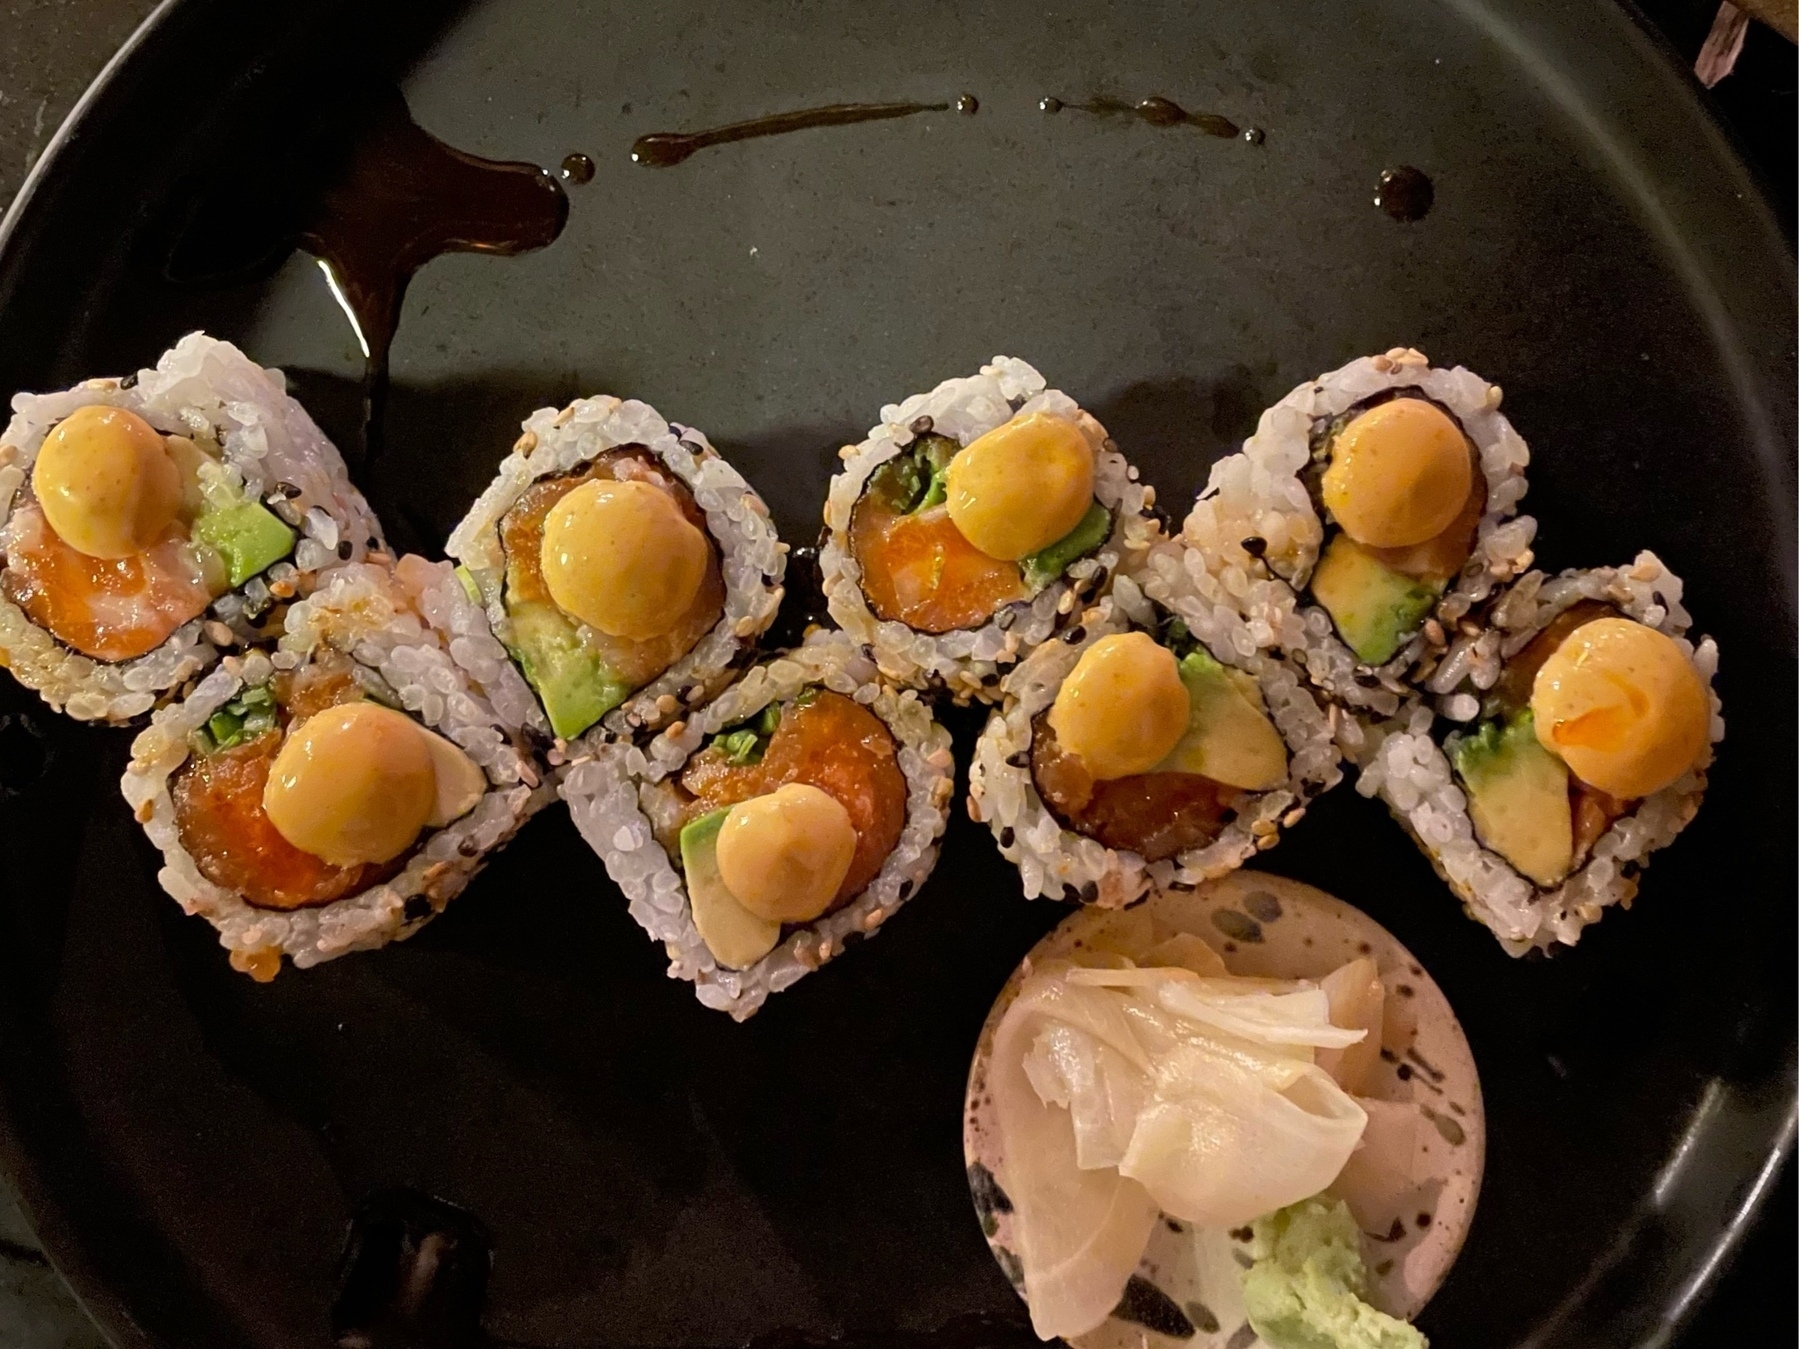 Tuna maki with avocado and Japanese mayo.